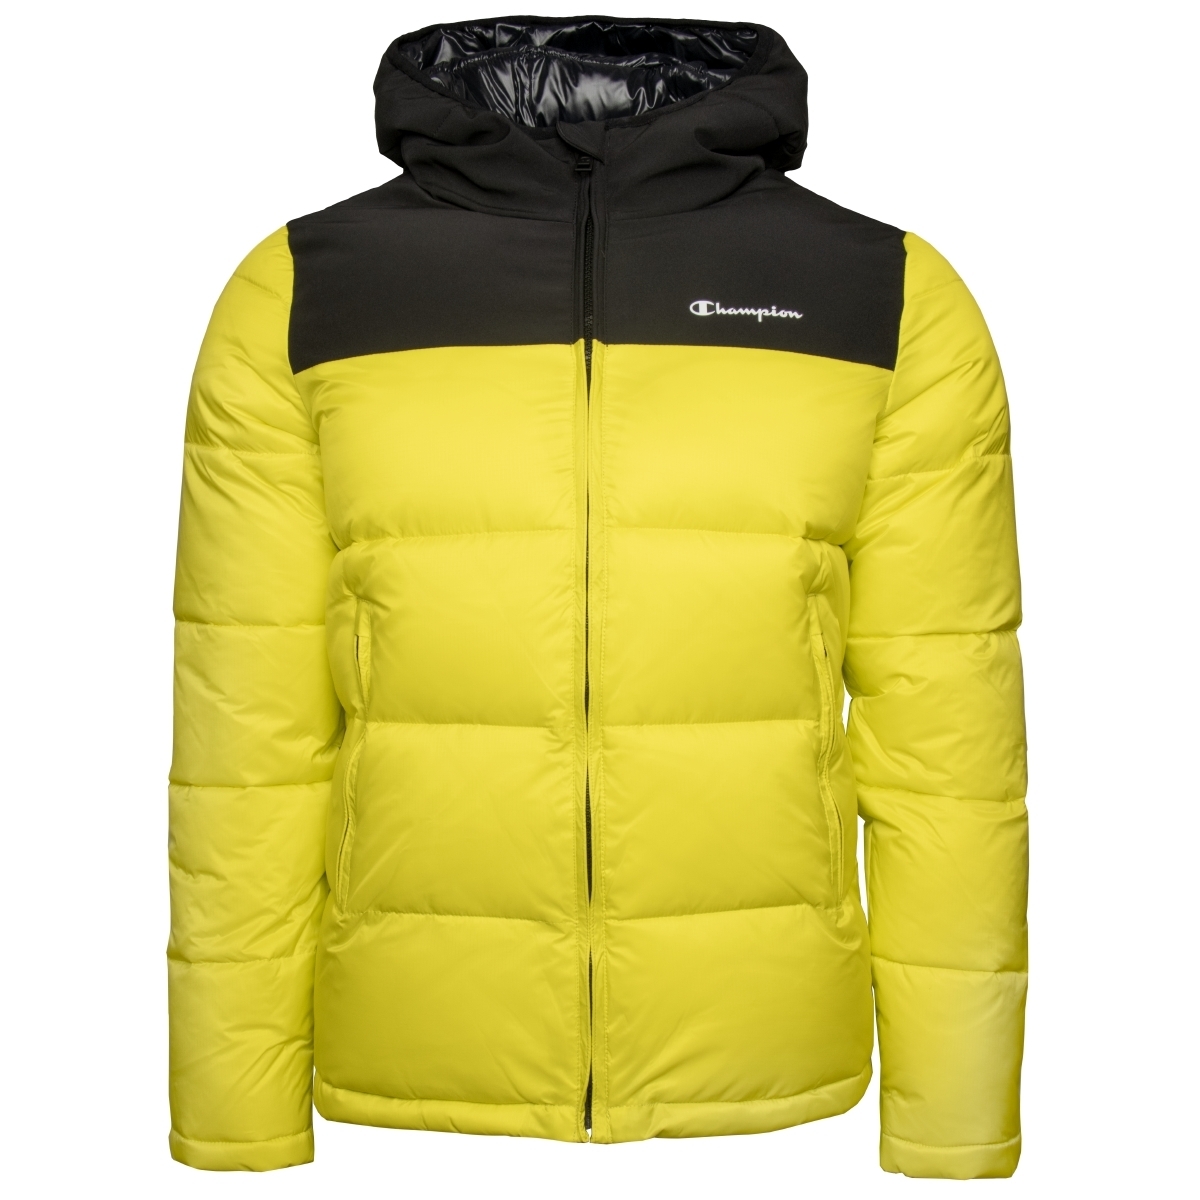 Champion Hooded Jacket Winterjacke gelb